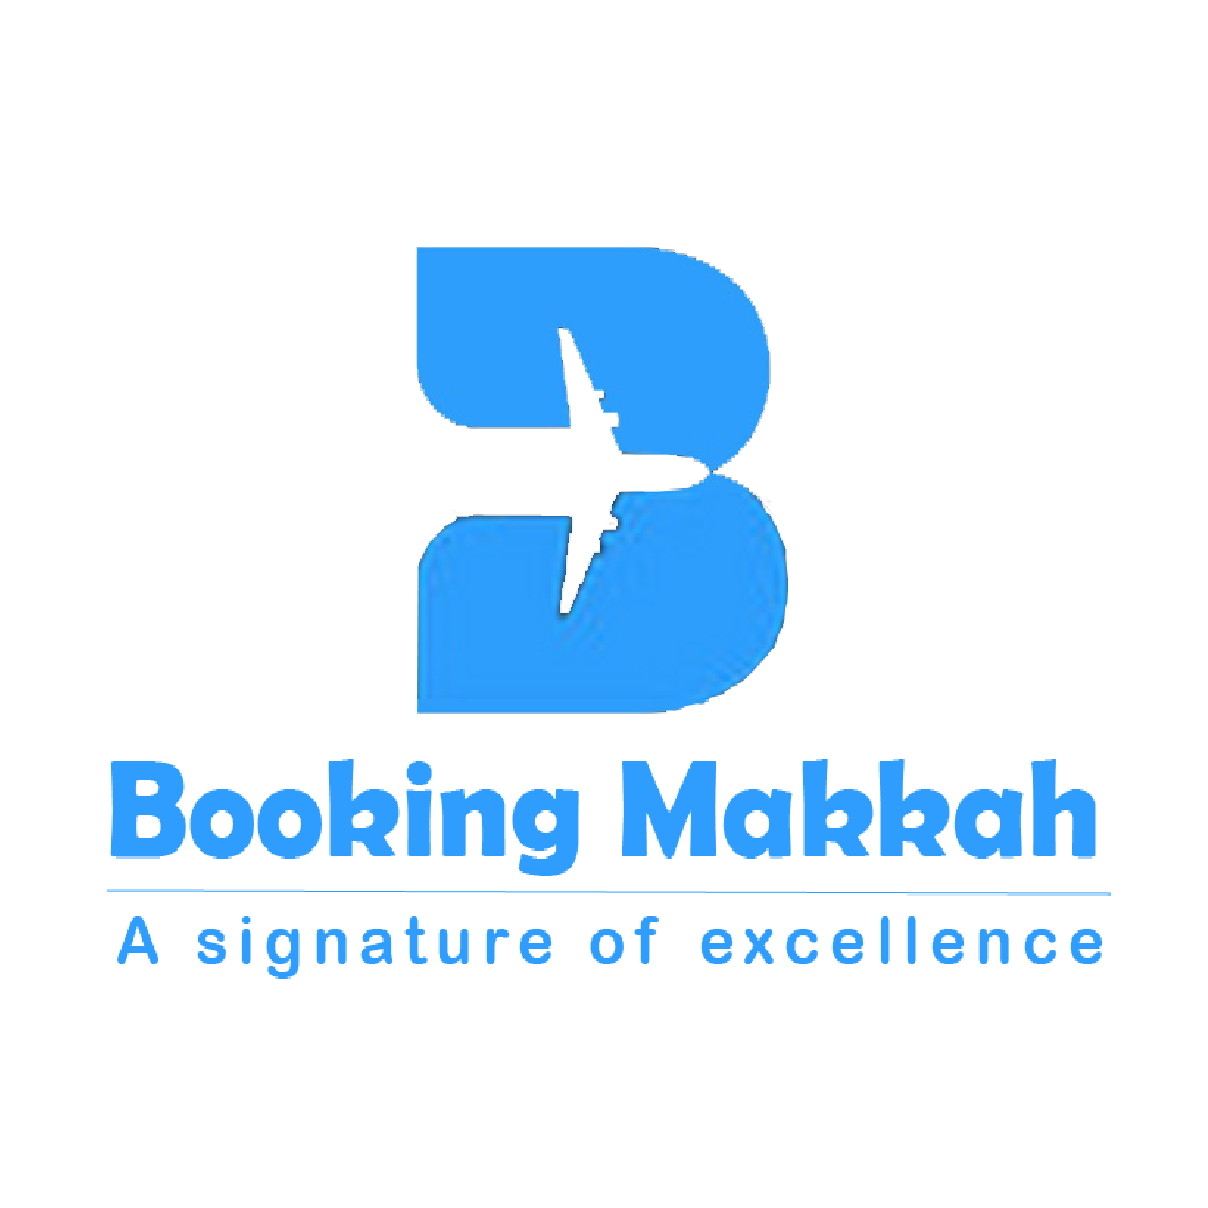 Booking Makkah